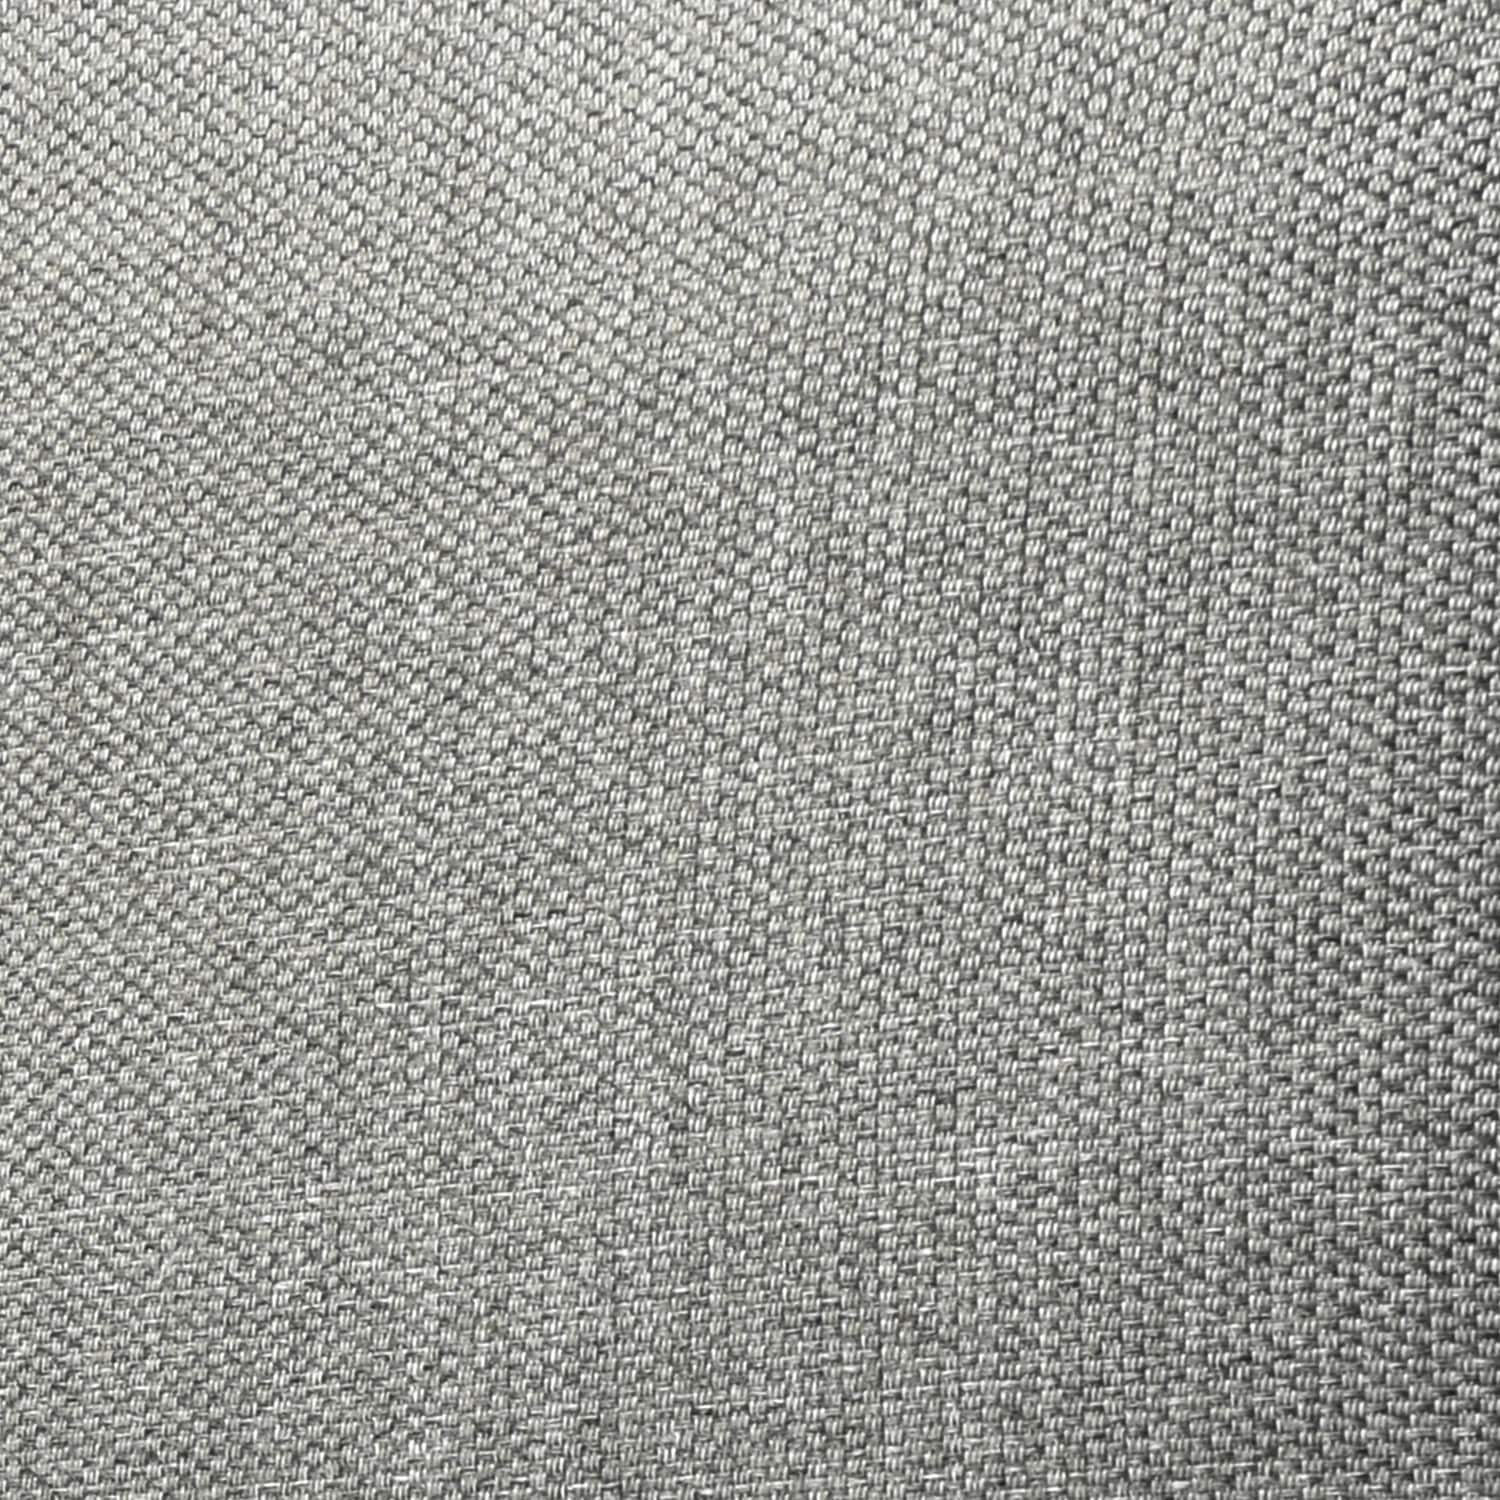 XIZZI Taurus 8-Piece Wicker Patio Conversation Set with Gray Cushions ...